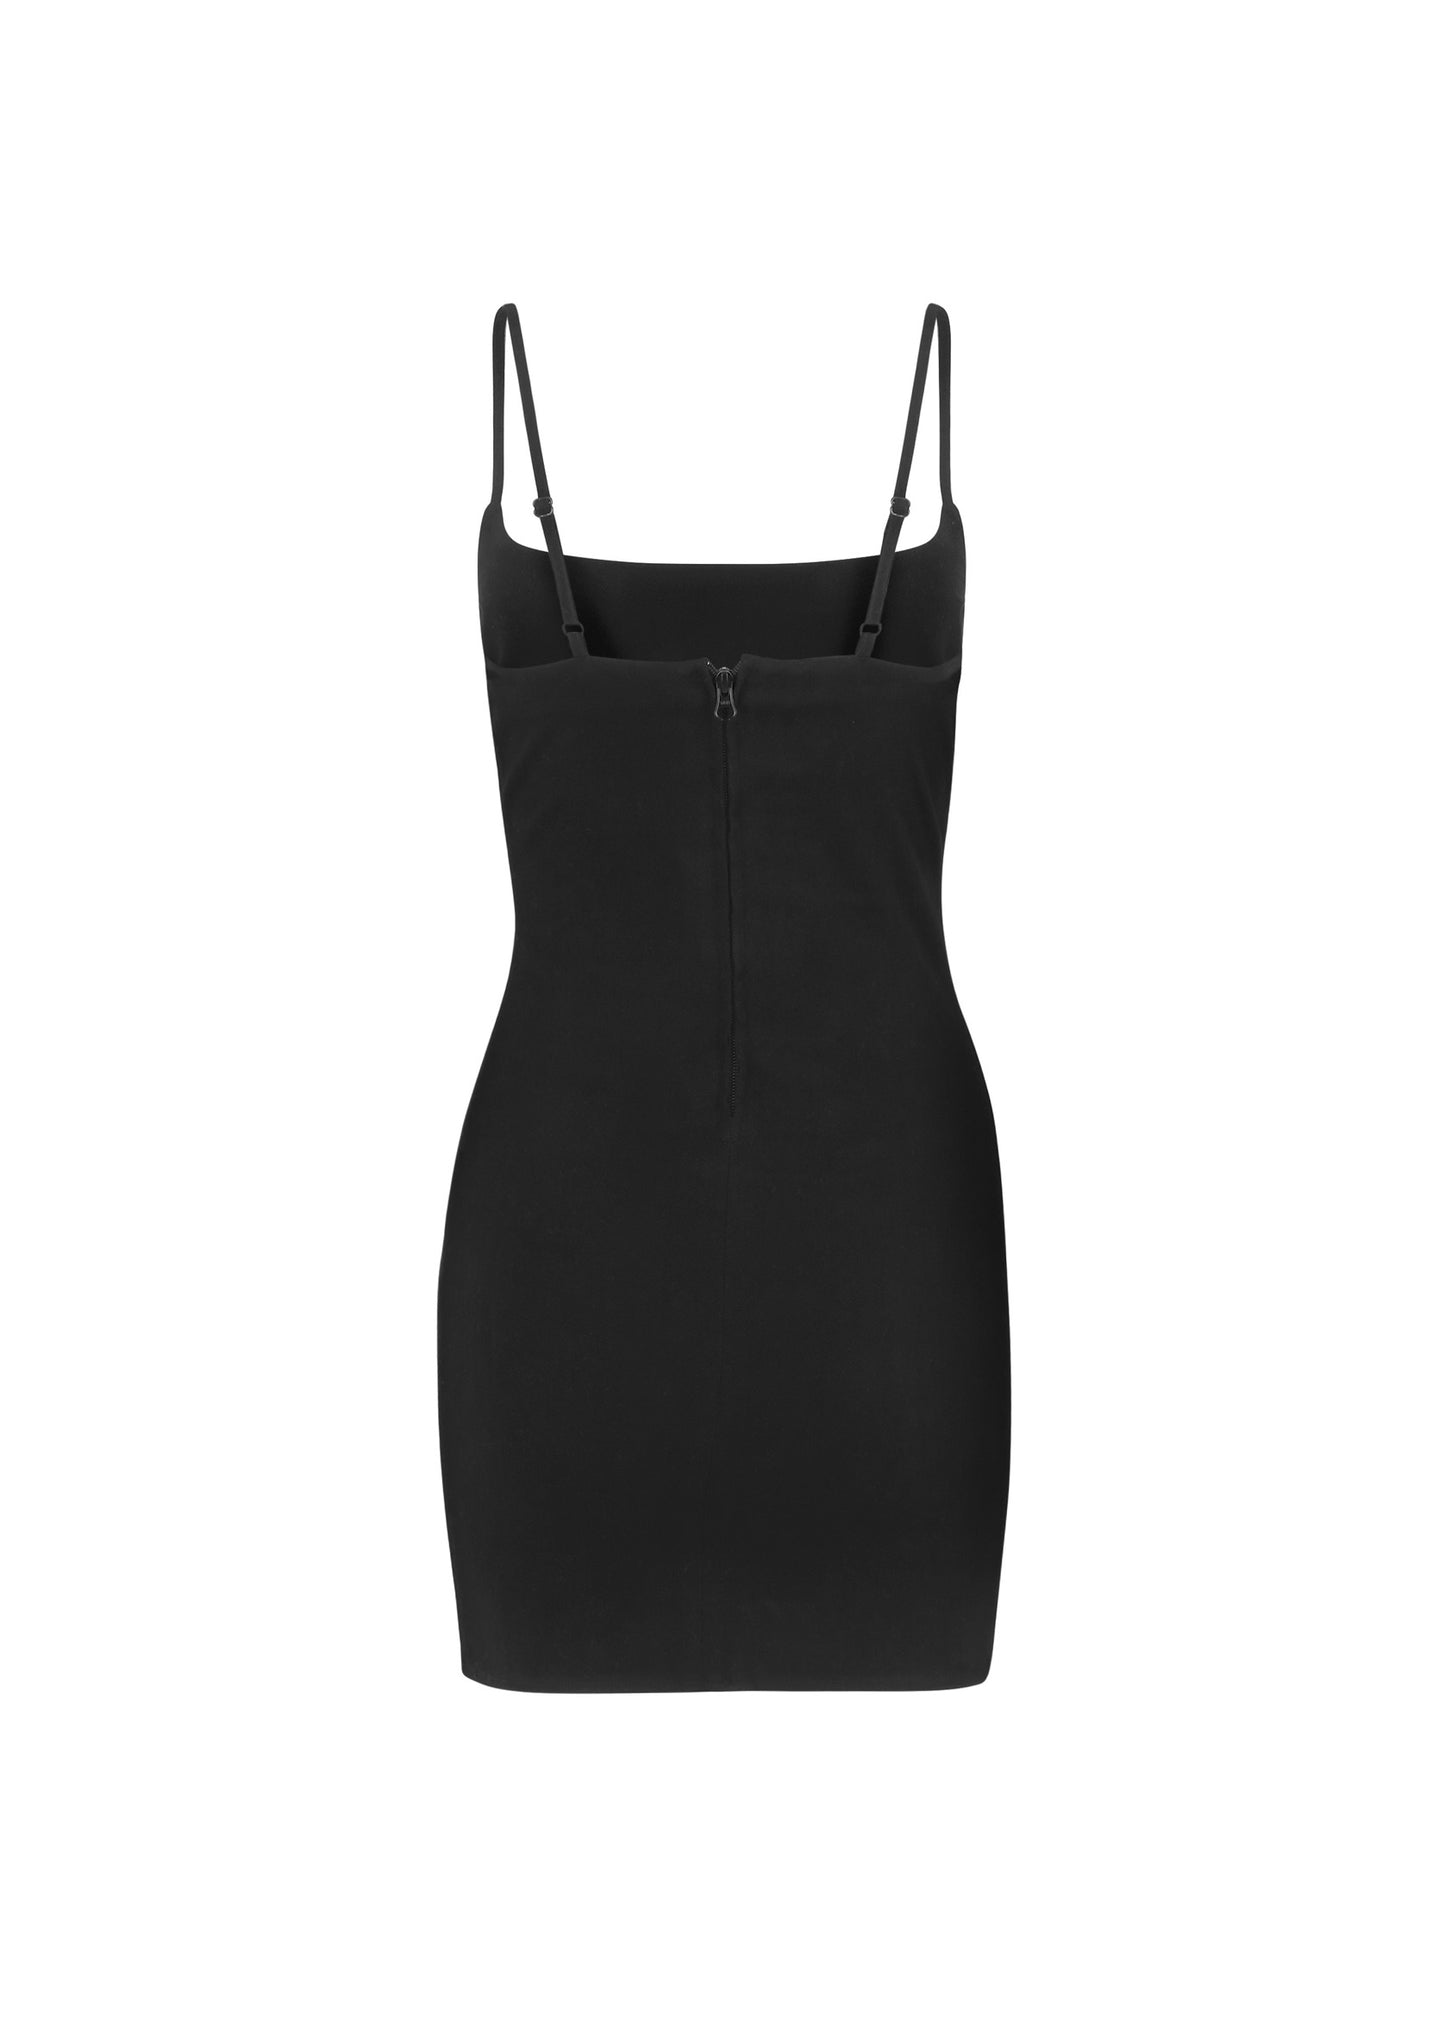 KATHERINE DRESS SAMPLE 1 | BLACK